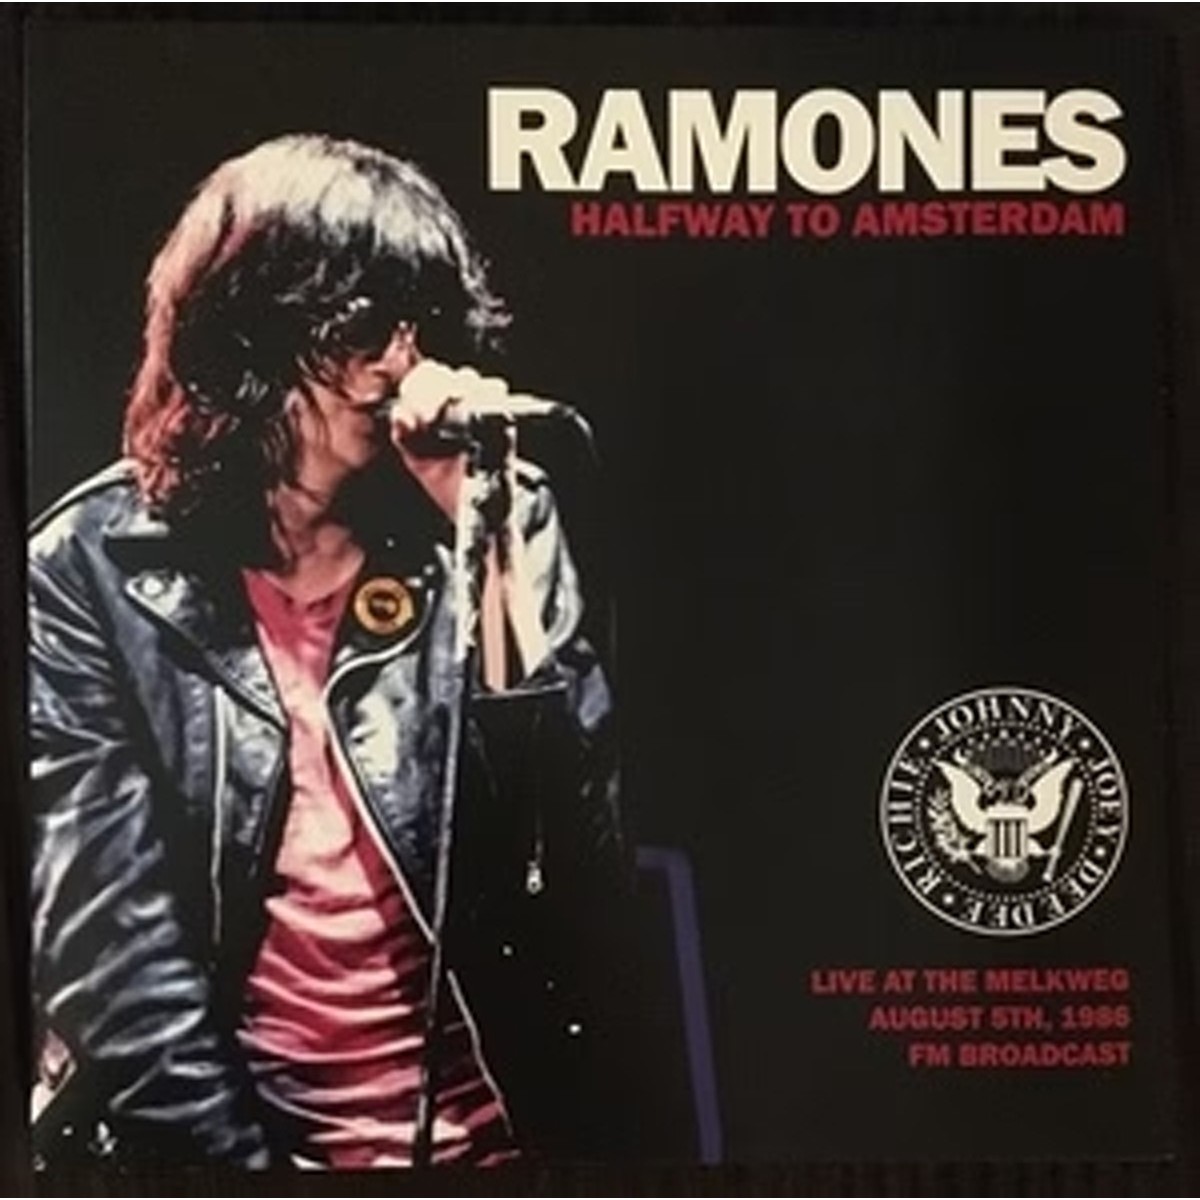 Ramones - Halfway To Amsterdam: Live At The Melkweg, August 5th, 1986 - Fm Broadcast